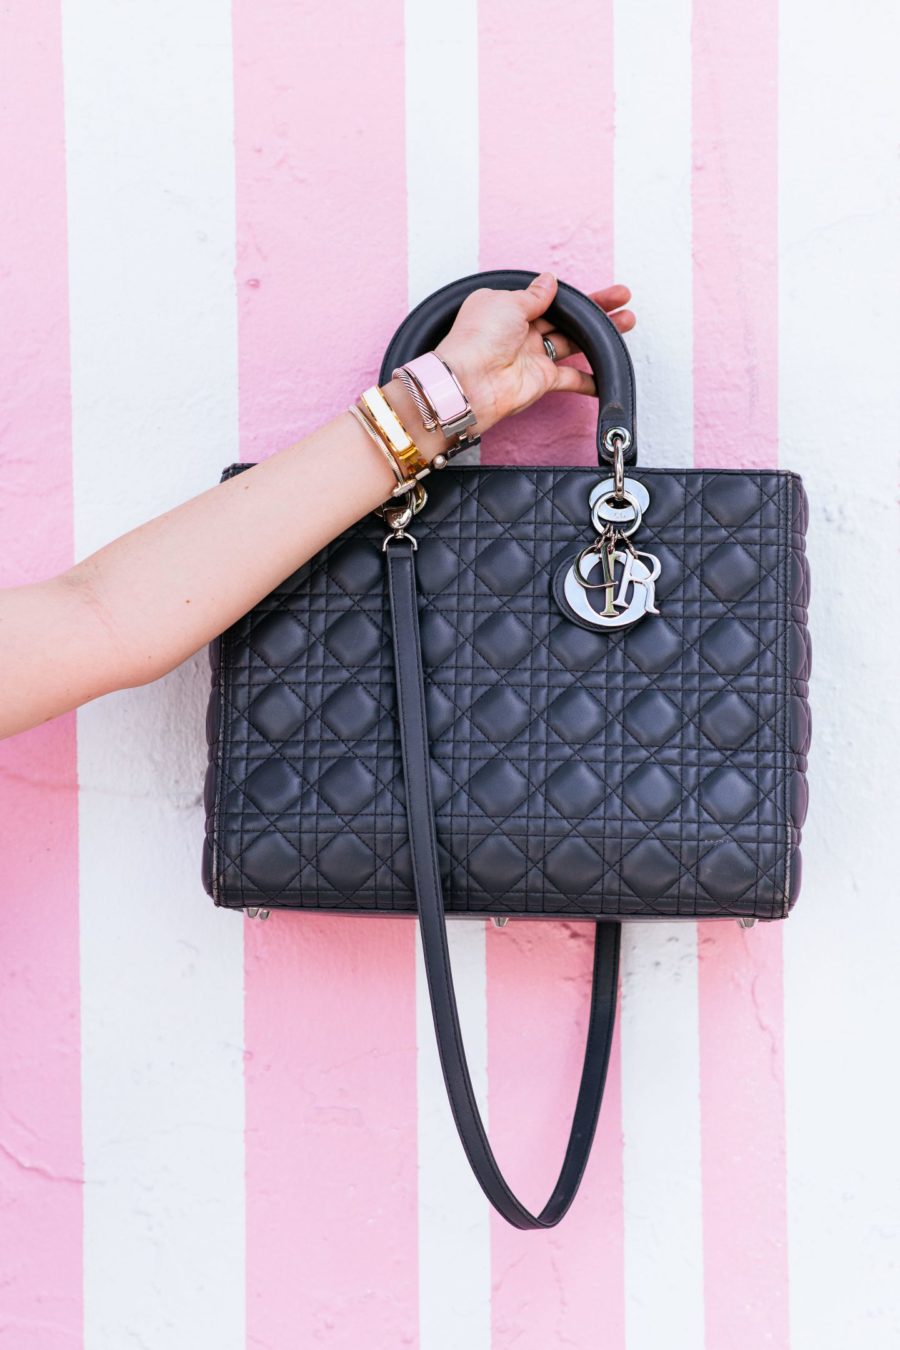 purchase designer handbags on a budget 